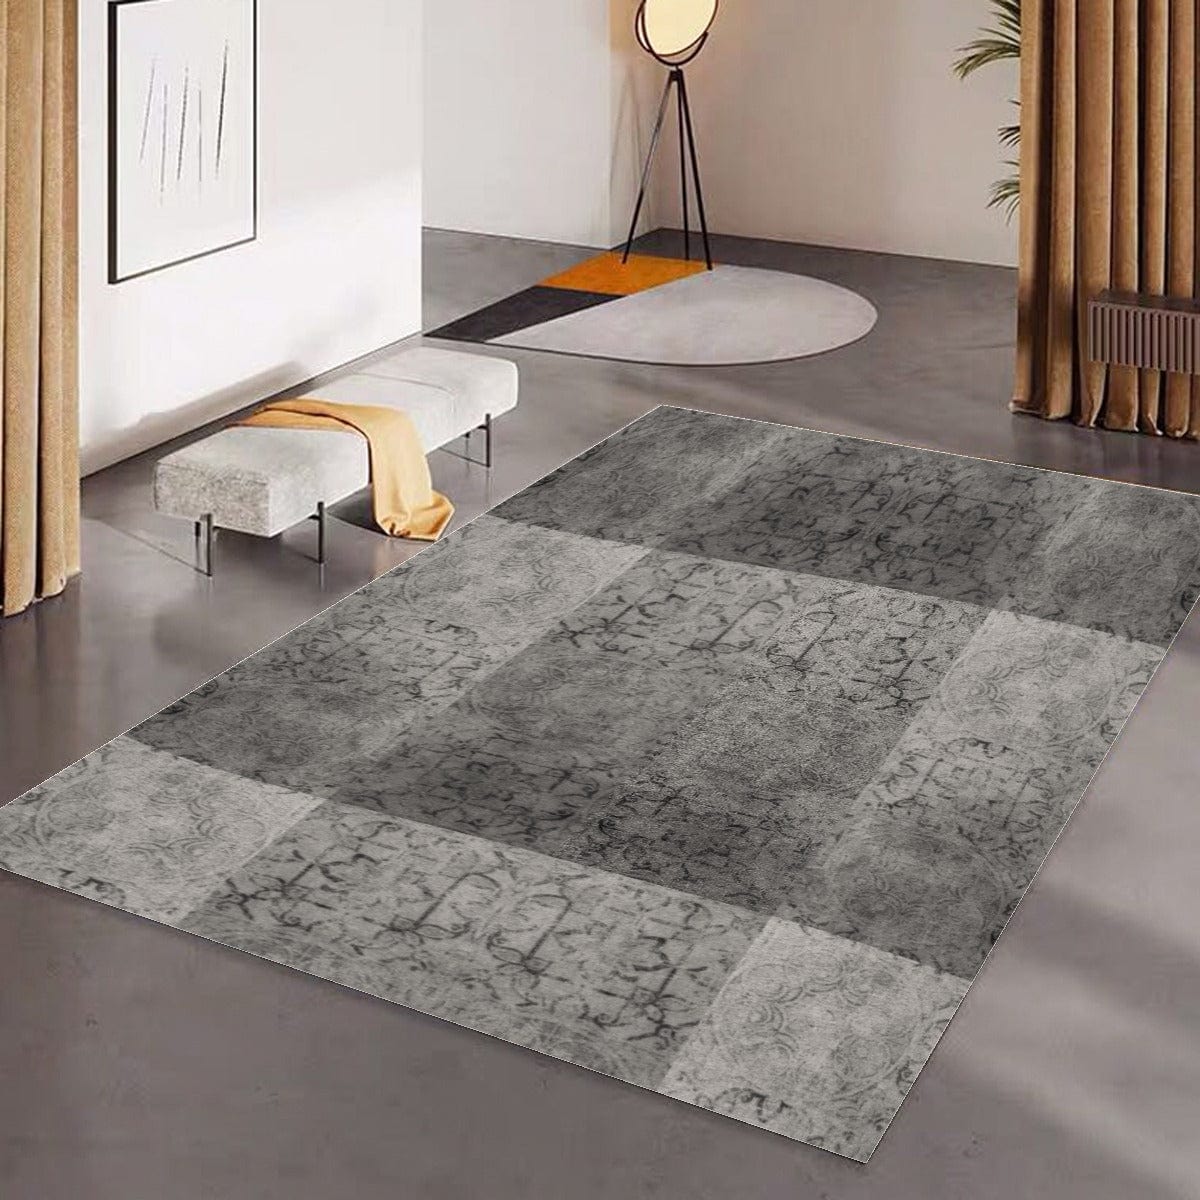 Yoycol Rugs Gray Tile - Foldable Rectangular Floor Mat